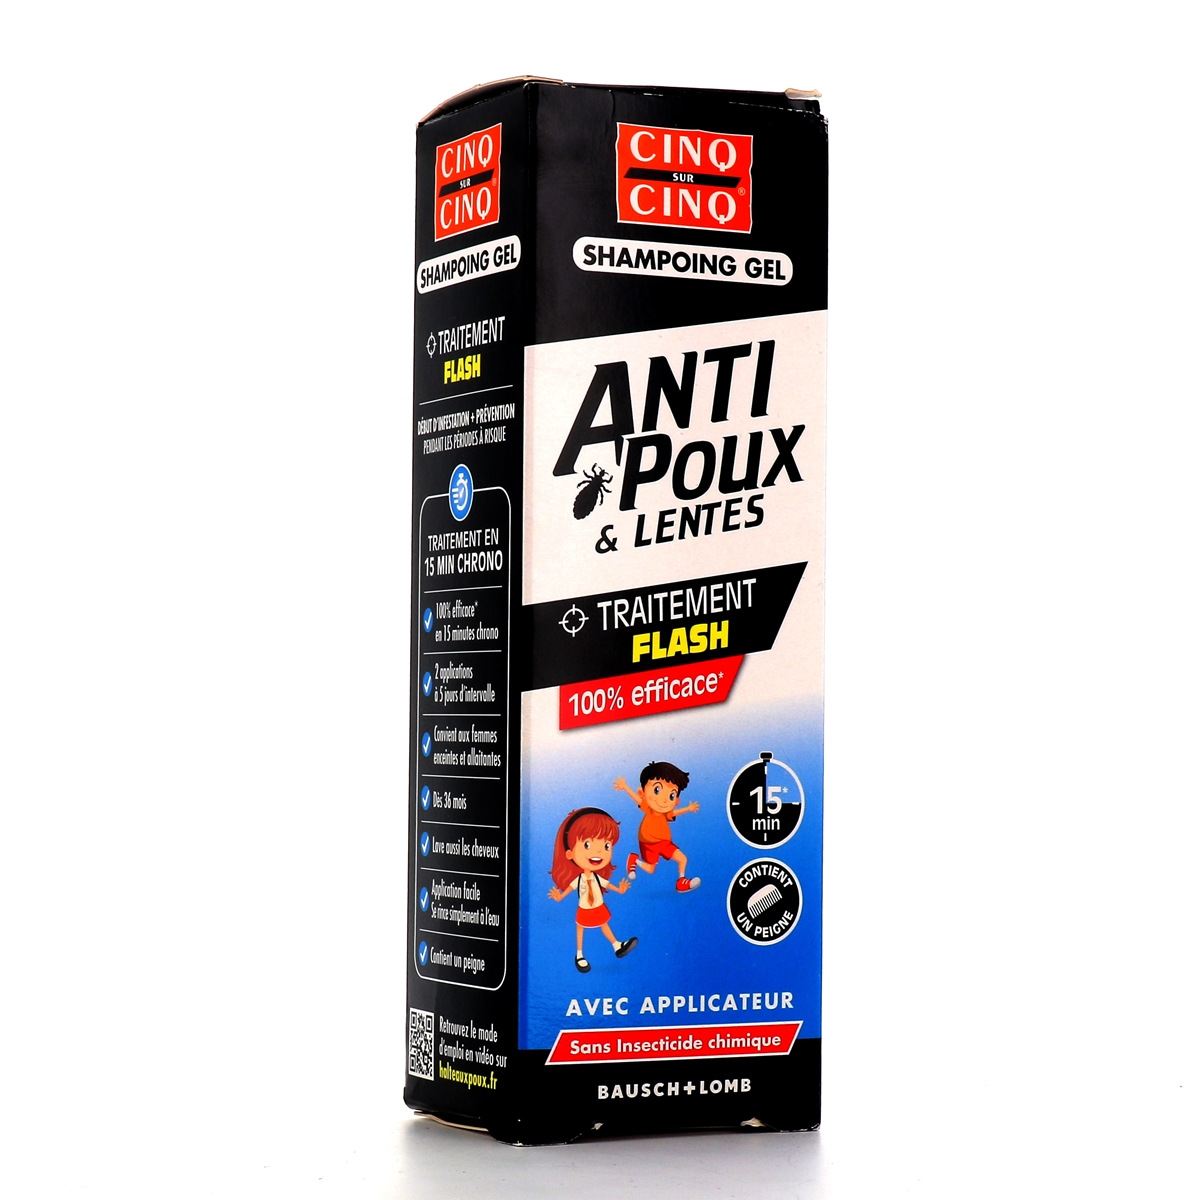 CINQ SUR CINQ Shampoing gel anti-poux et lentes flacon 400ml -  Parapharmacie Prado Mermoz